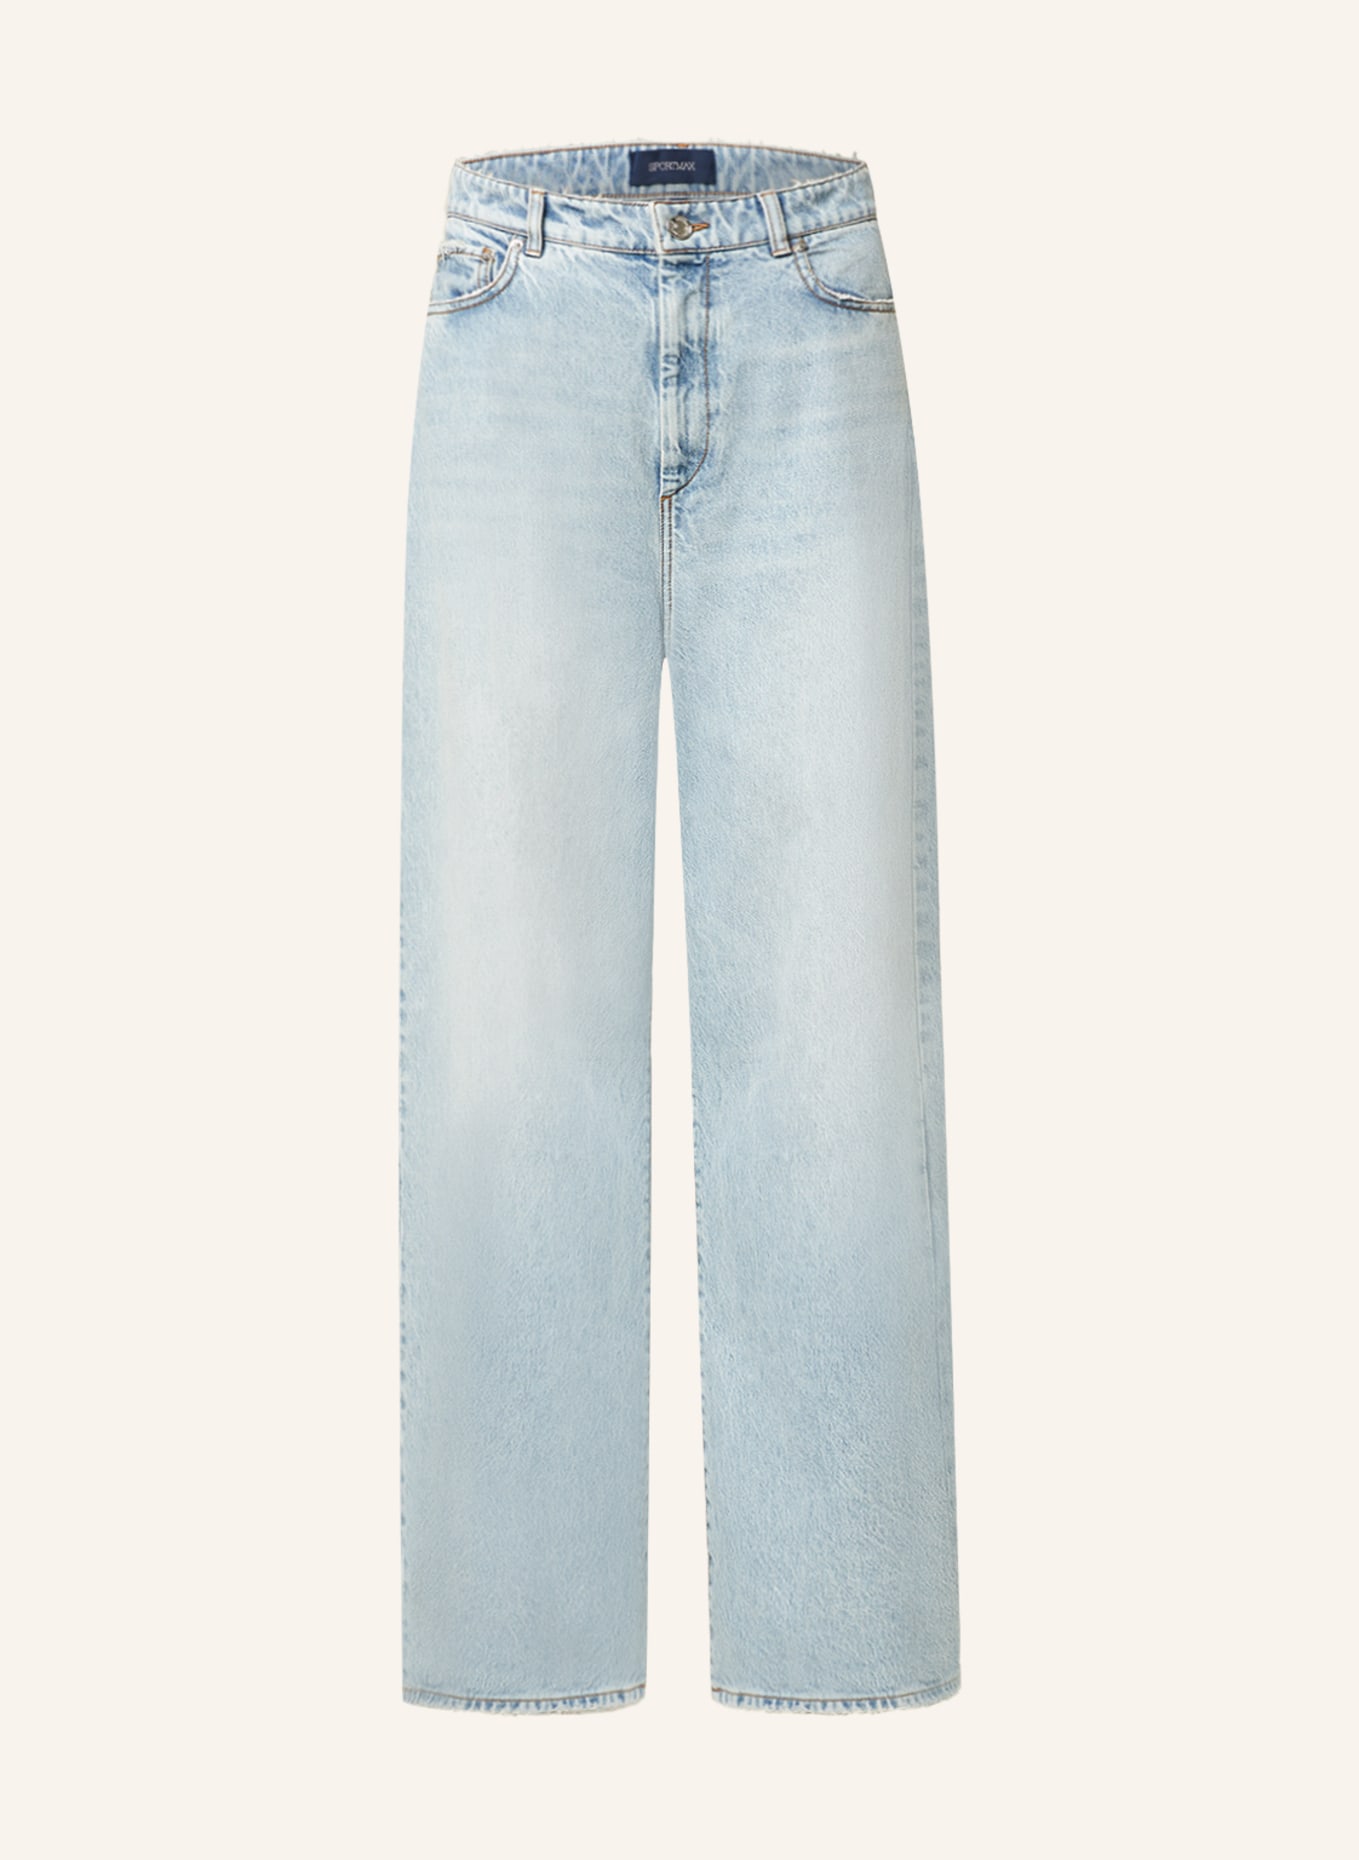 SPORTMAX Straight Jeans ANGRI, Farbe: 009 MIDNIGHTBLUE (Bild 1)